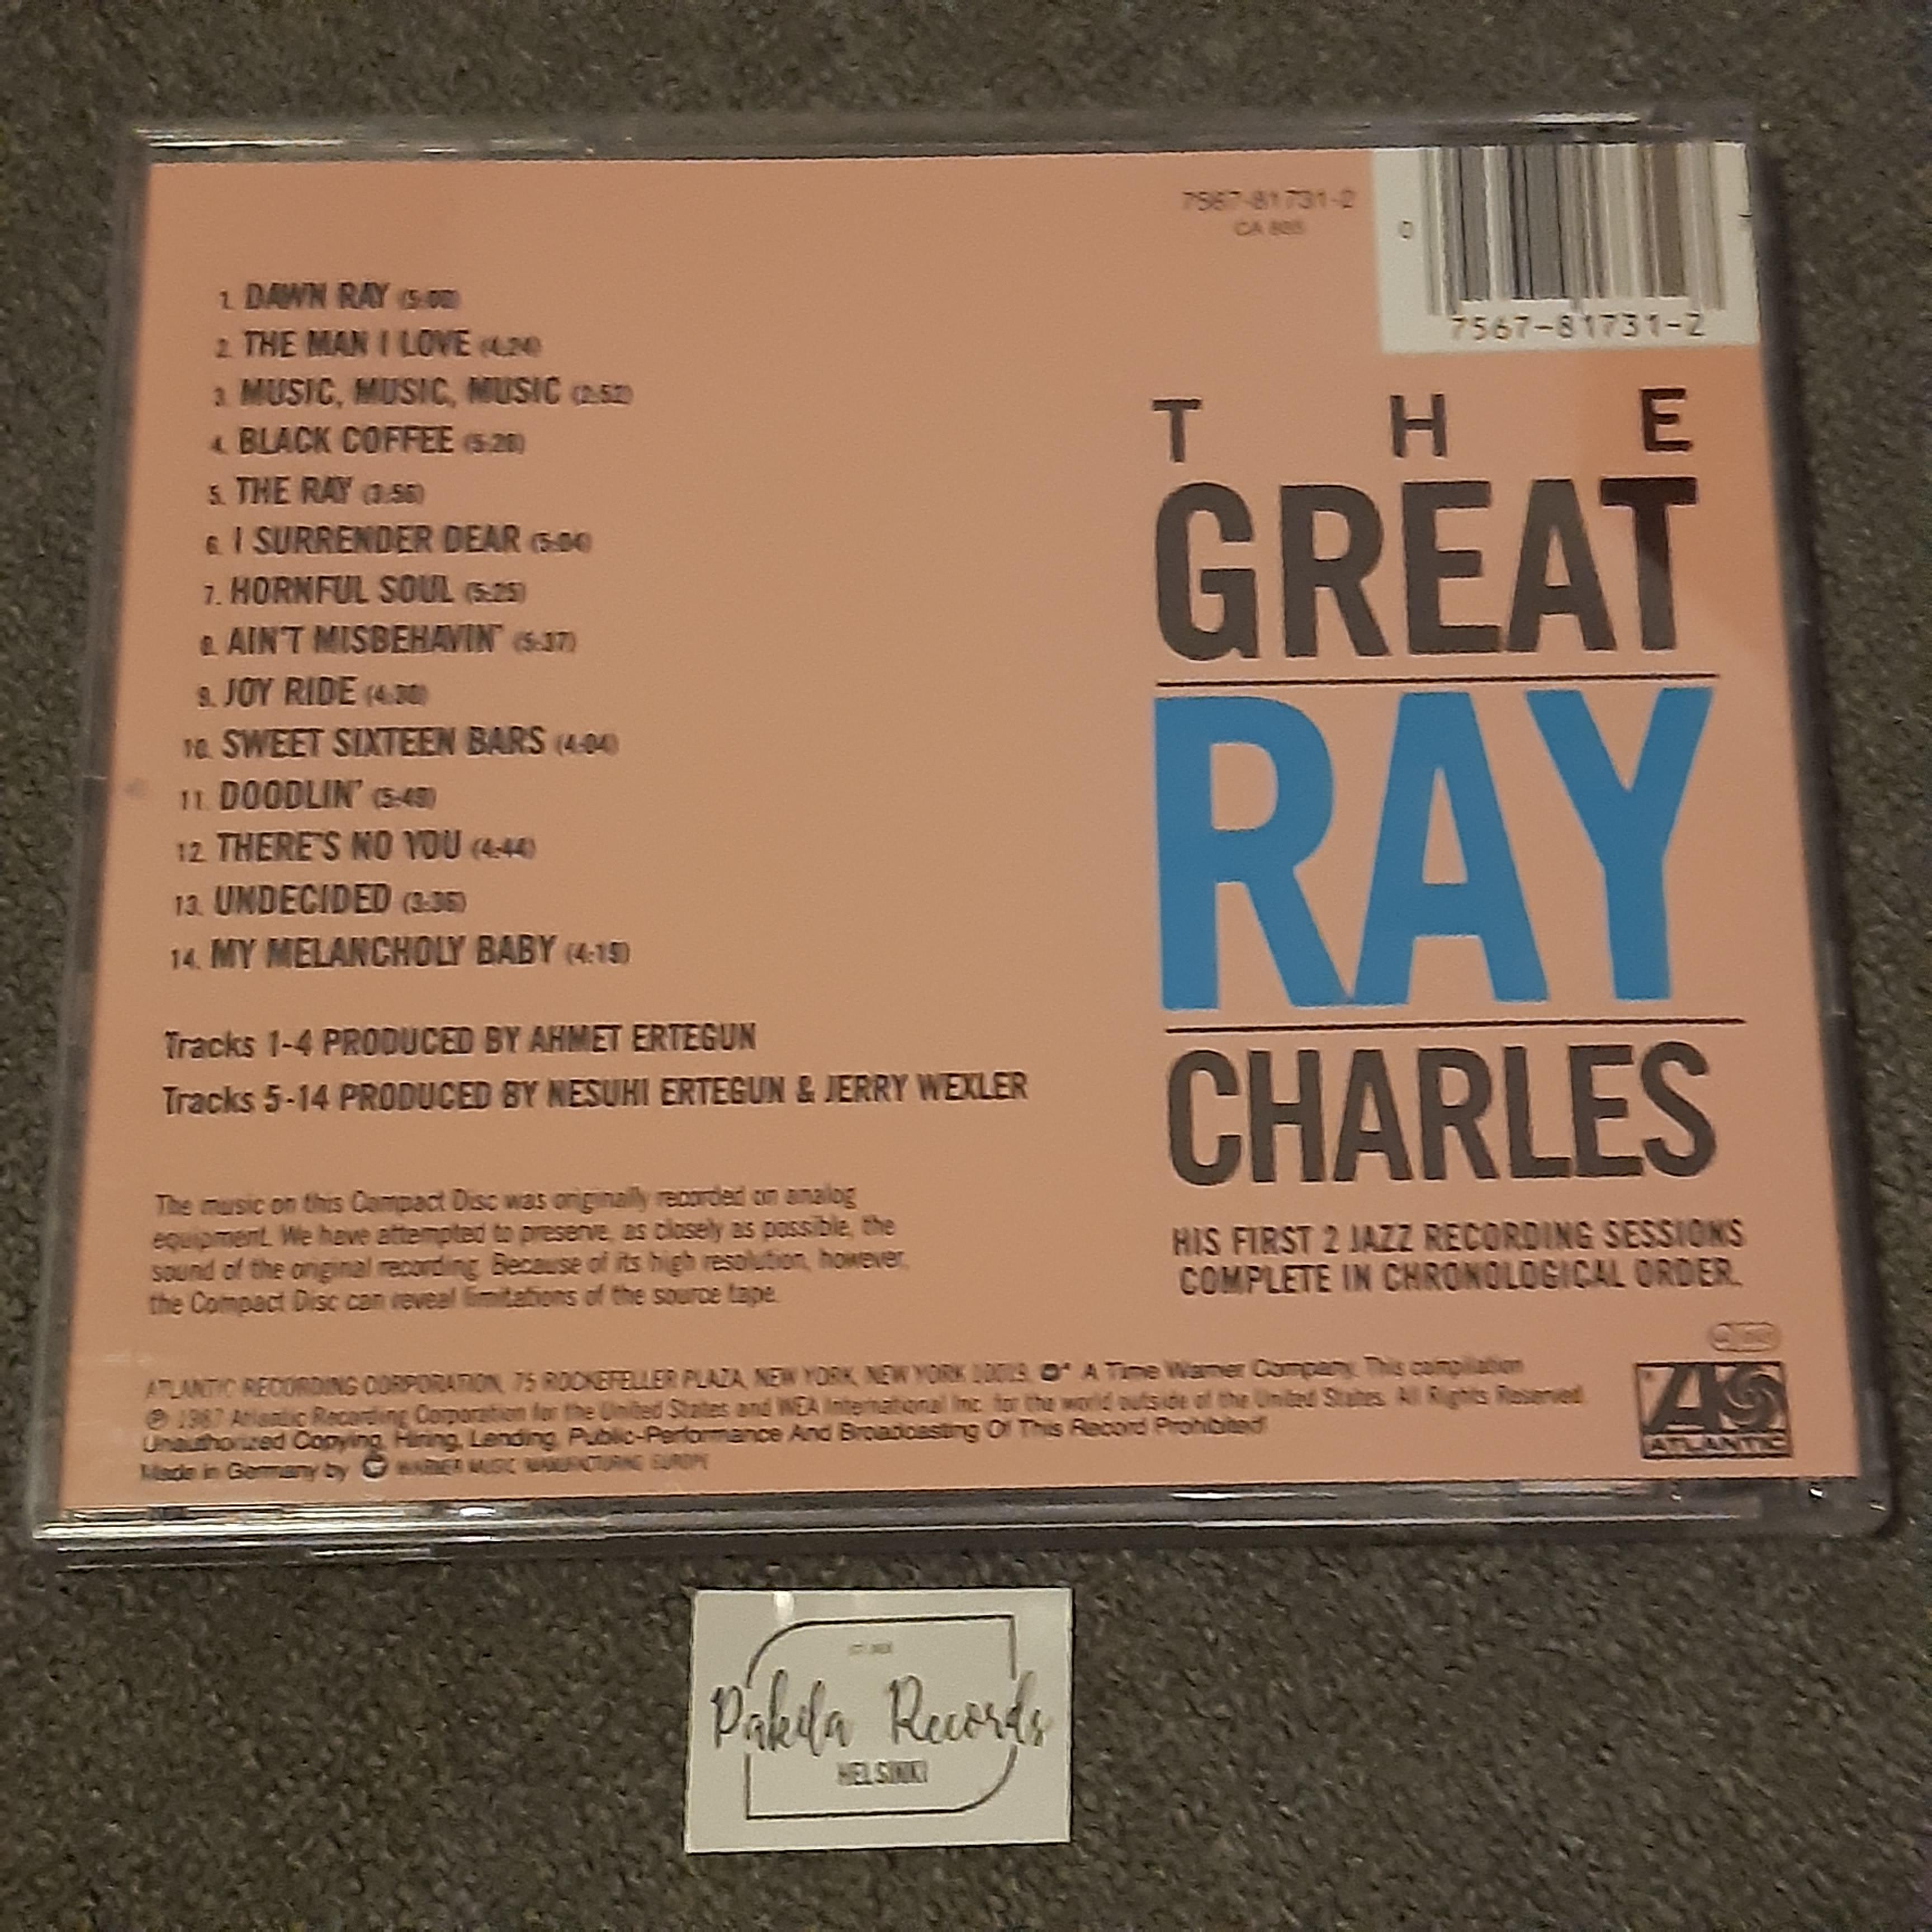 Ray Charles - The Great Ray Charles - CD (käytetty)